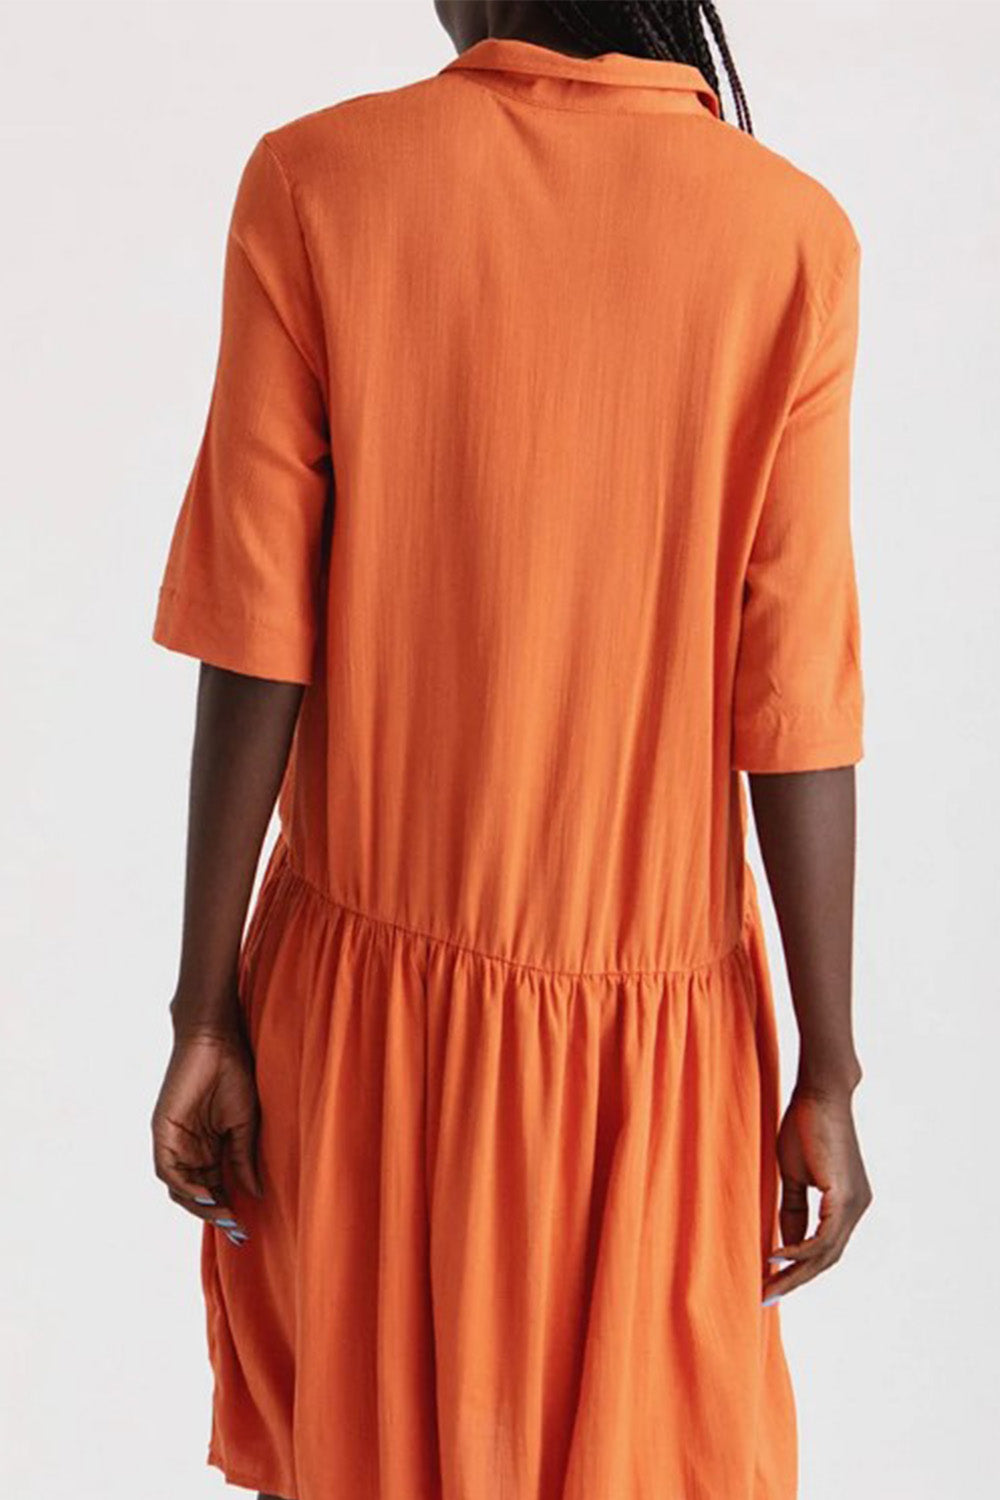 Bucolic Orange Dress